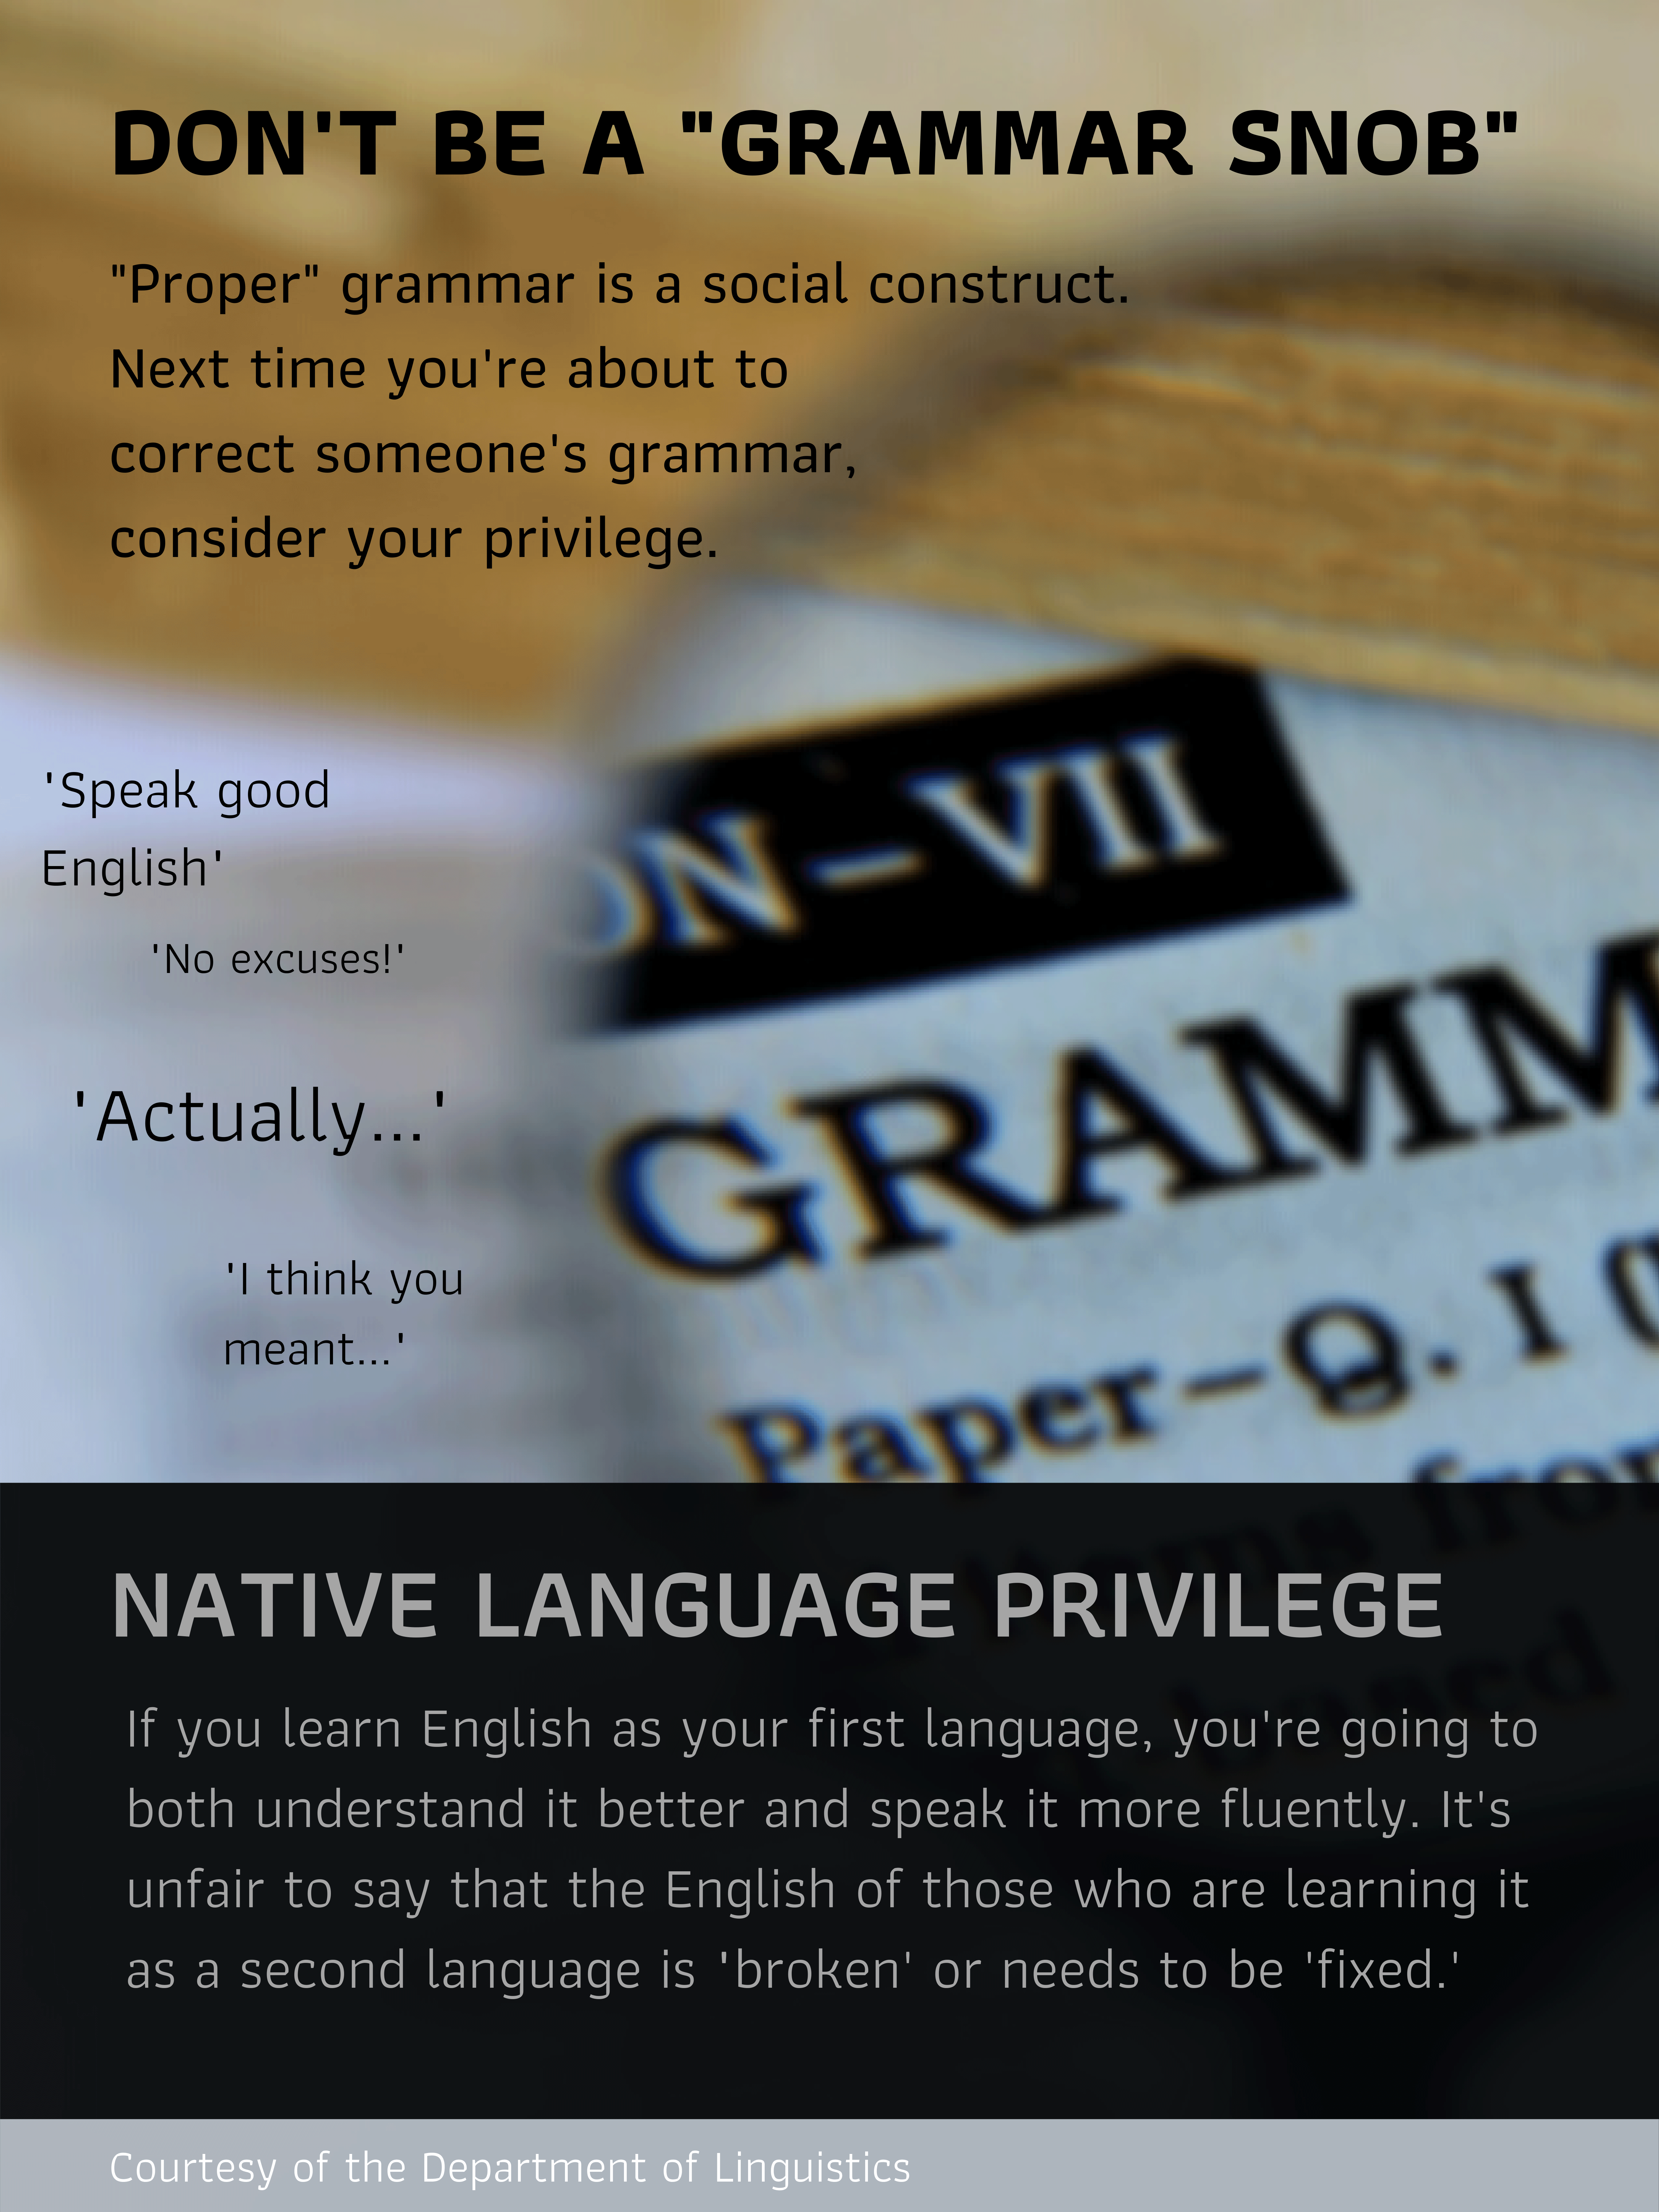 Linguistics Poster. Don't be a "grammar snob". See webpage for full description.